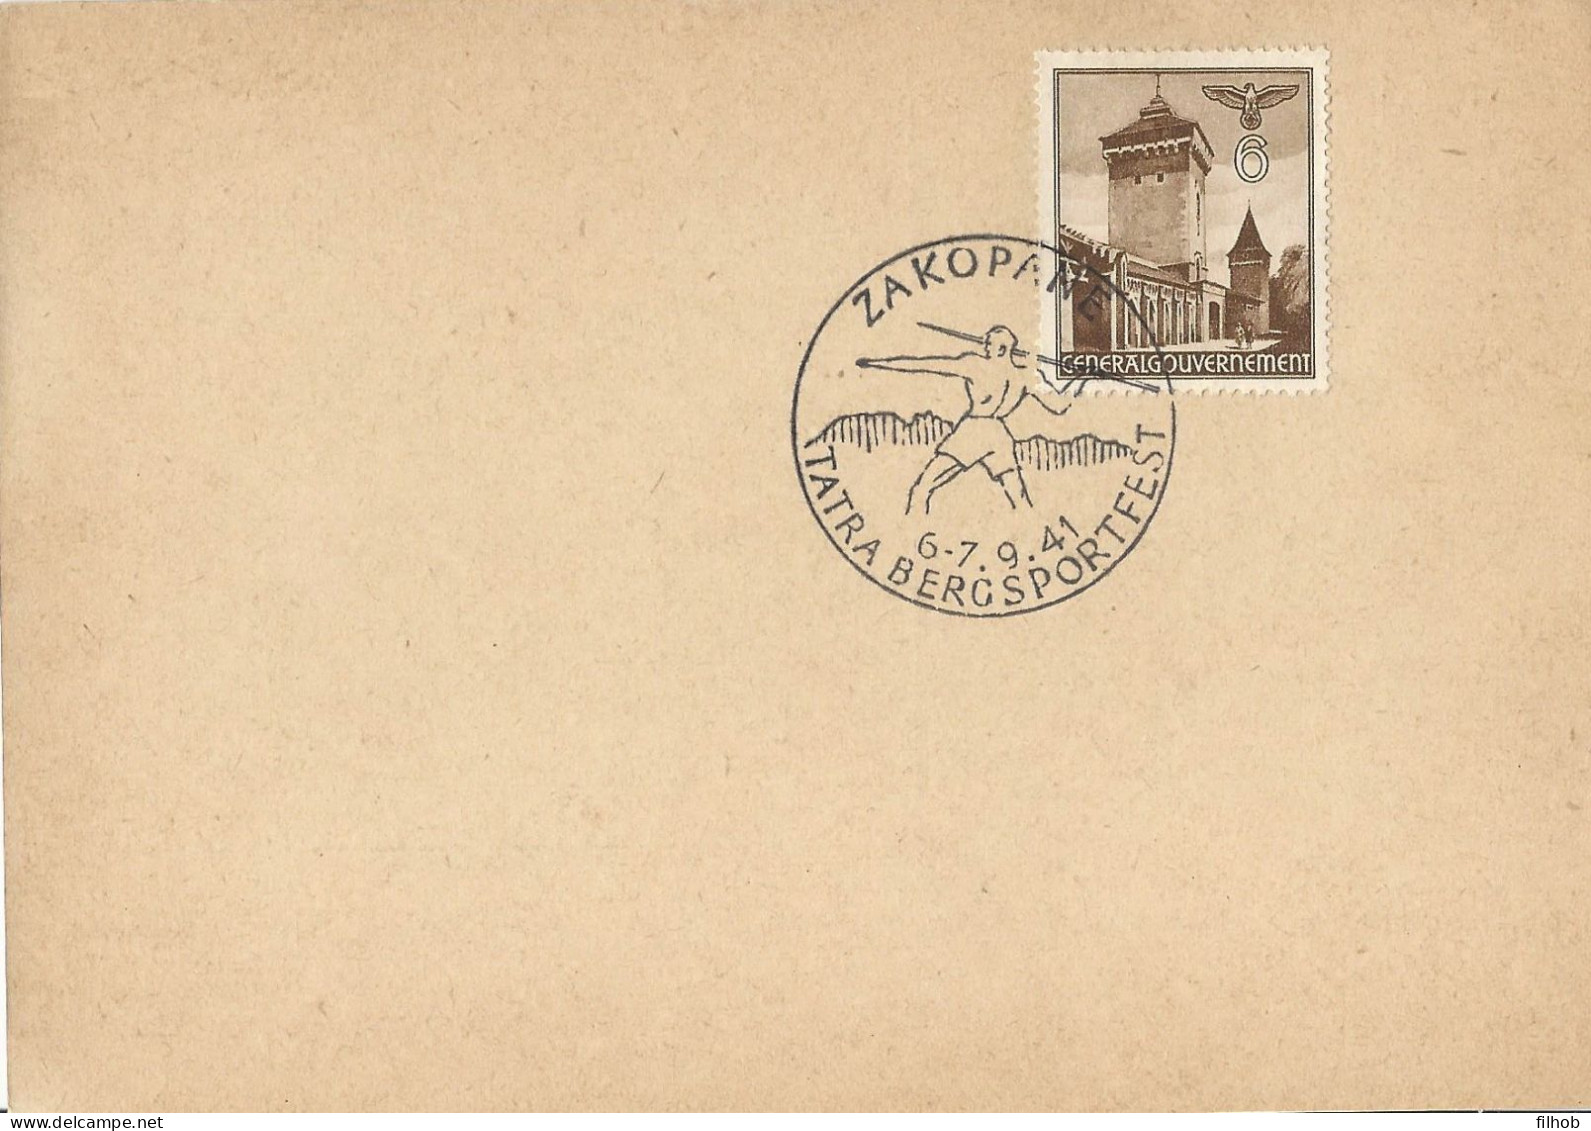 Poland GG Postmark (A206): 1941.09.06 Zakopane Tatra Mountain Sports Festival Javelin Thrower - General Government